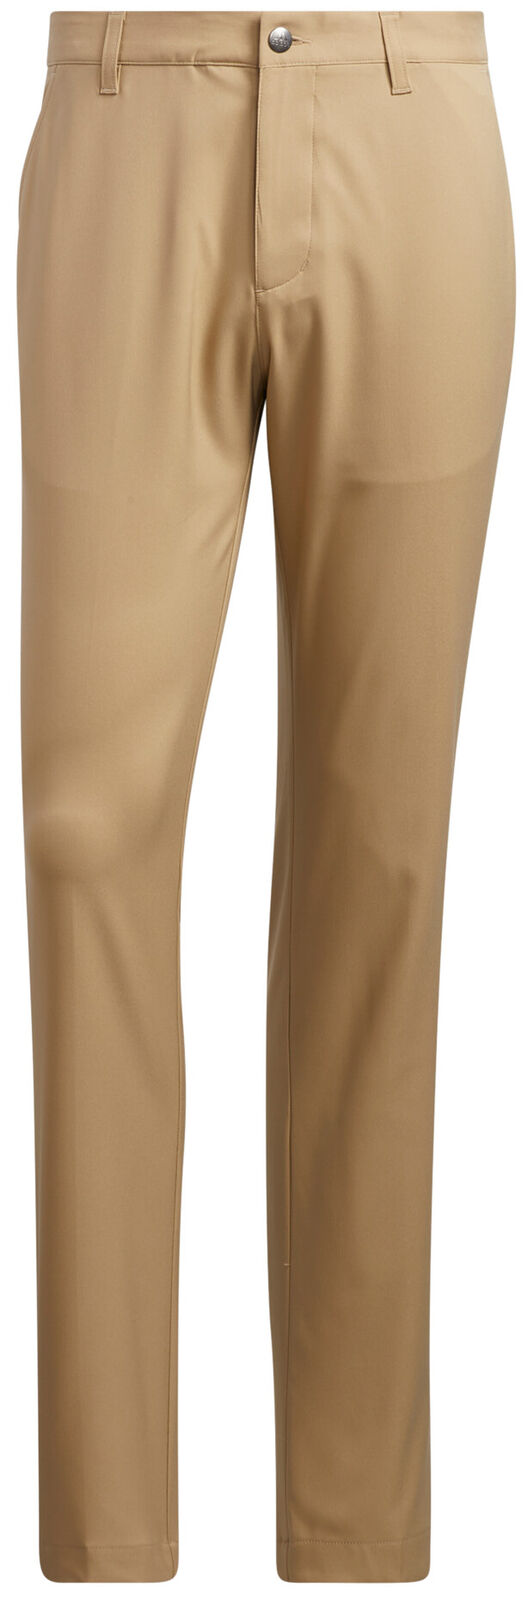 adidas Ultimate 365 Golf Pants Men's TM6471S22 New